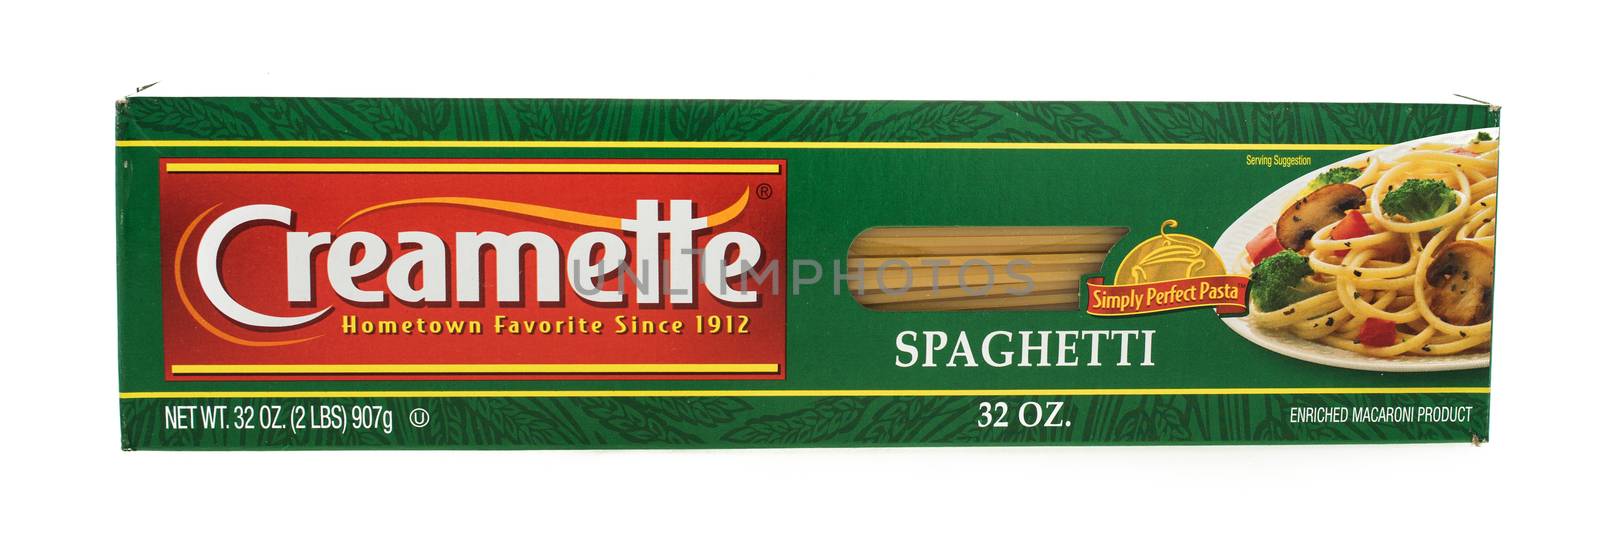 Spaghetti by homank76